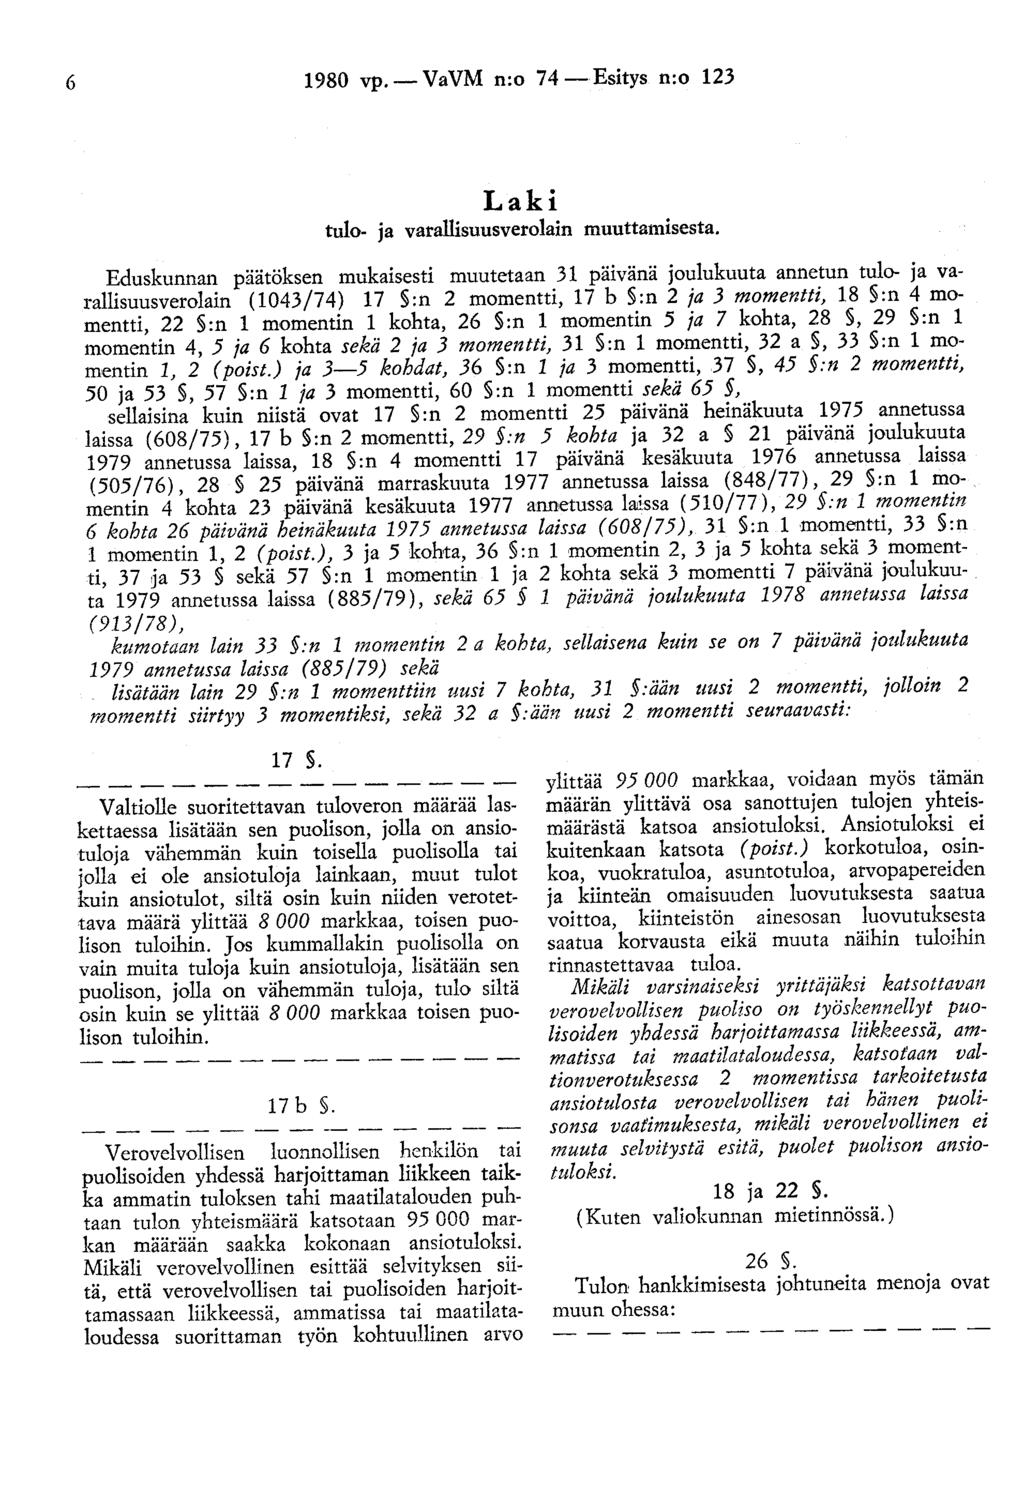 6 1980 vp.- Va VM n:o 7 4 -Esitys n:o 123 Laki tulo- ja varallisuusverolain muuttamisesta.